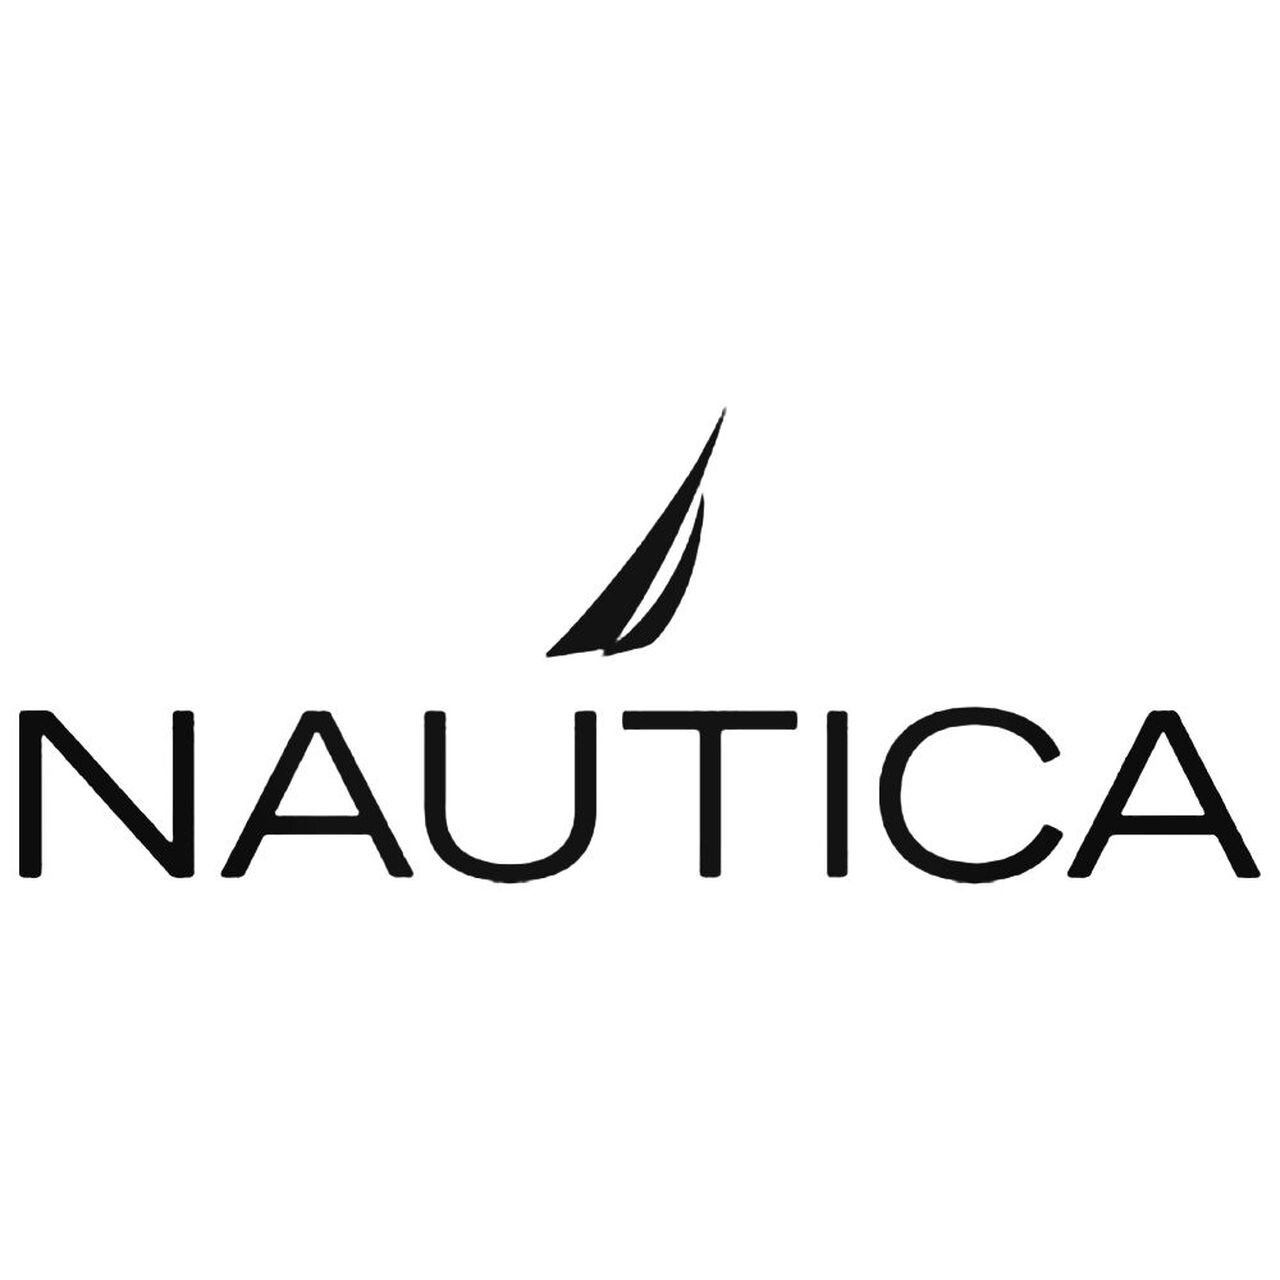 Nautica-Logo-Decal-Sticker__81464.1510914017.jpg